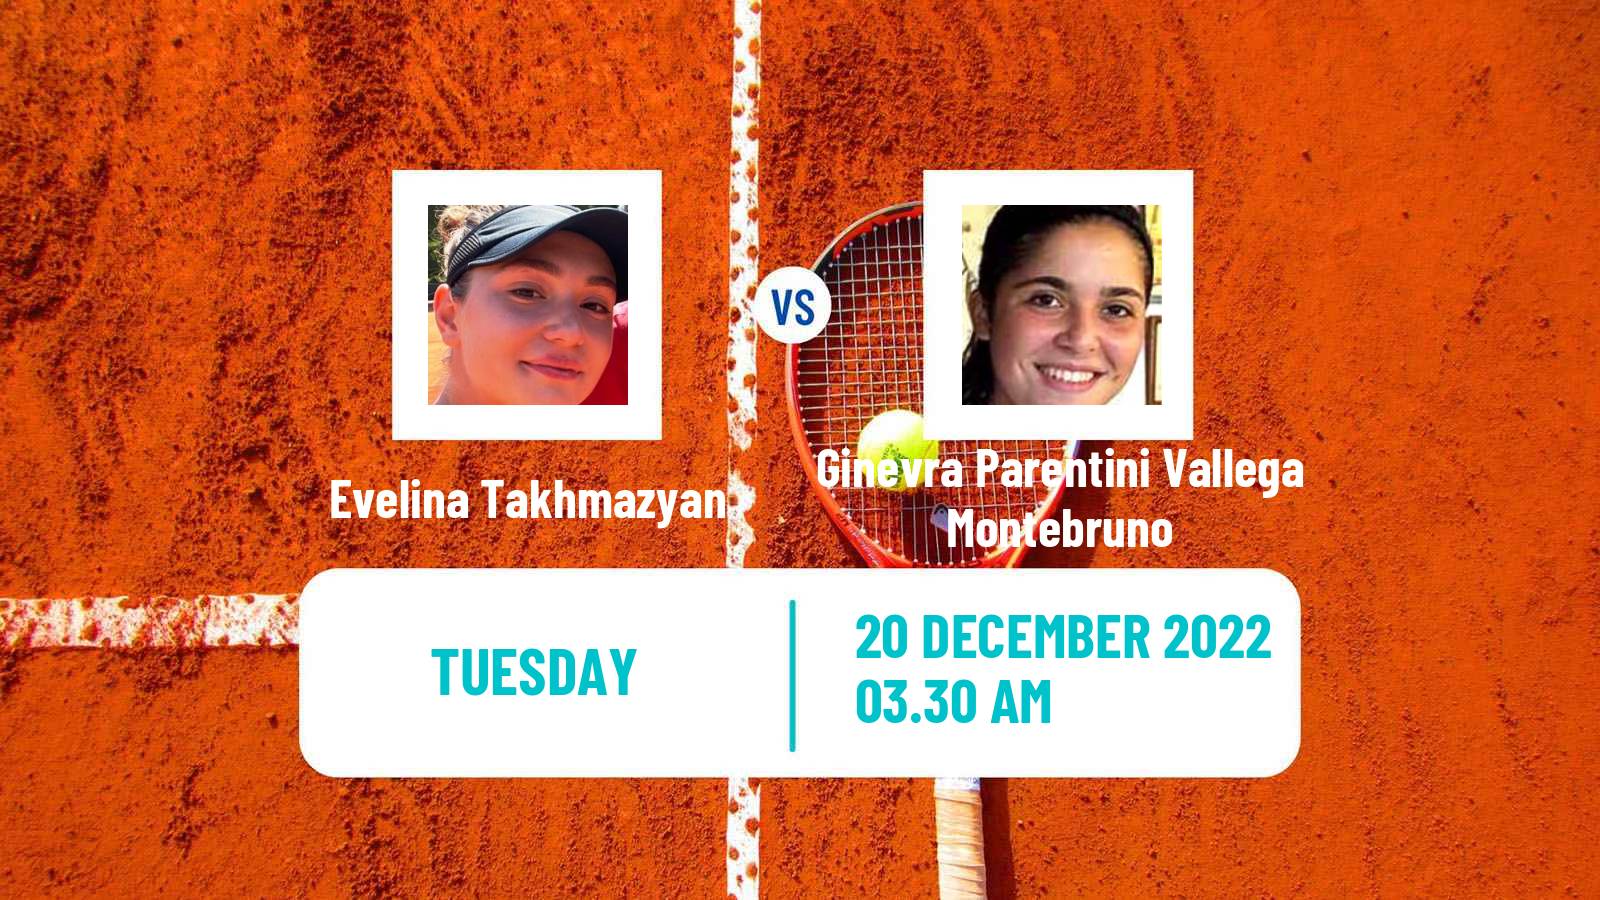 Tennis ITF Tournaments Evelina Takhmazyan - Ginevra Parentini Vallega Montebruno